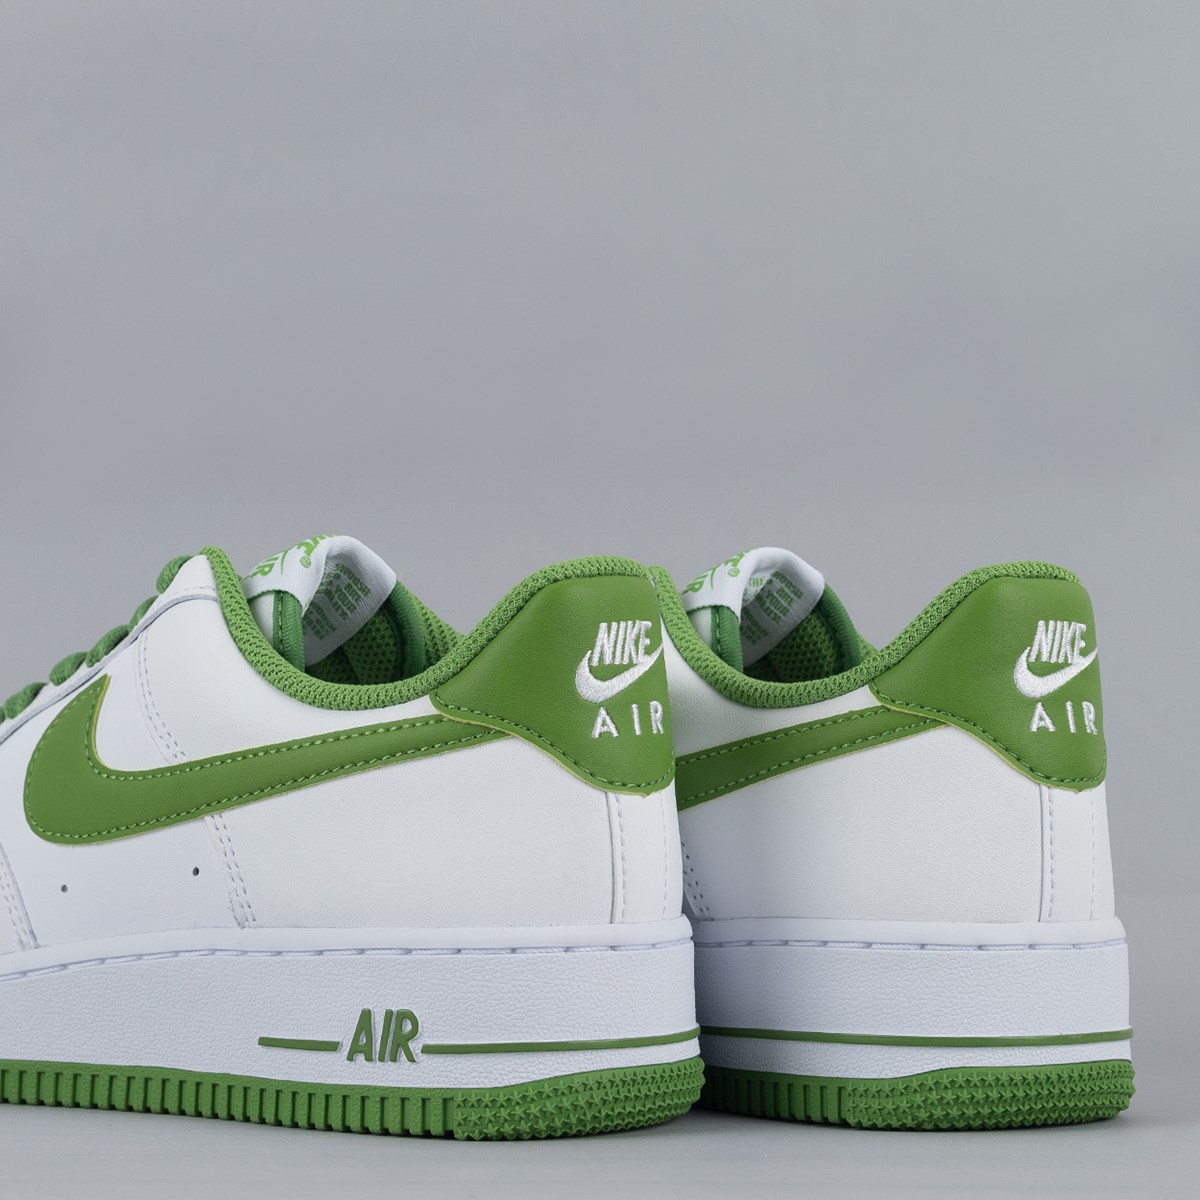 Tênis unissex Nike Air Force 1 baixo personalizado verde/verde Swoosh  masculino feminino